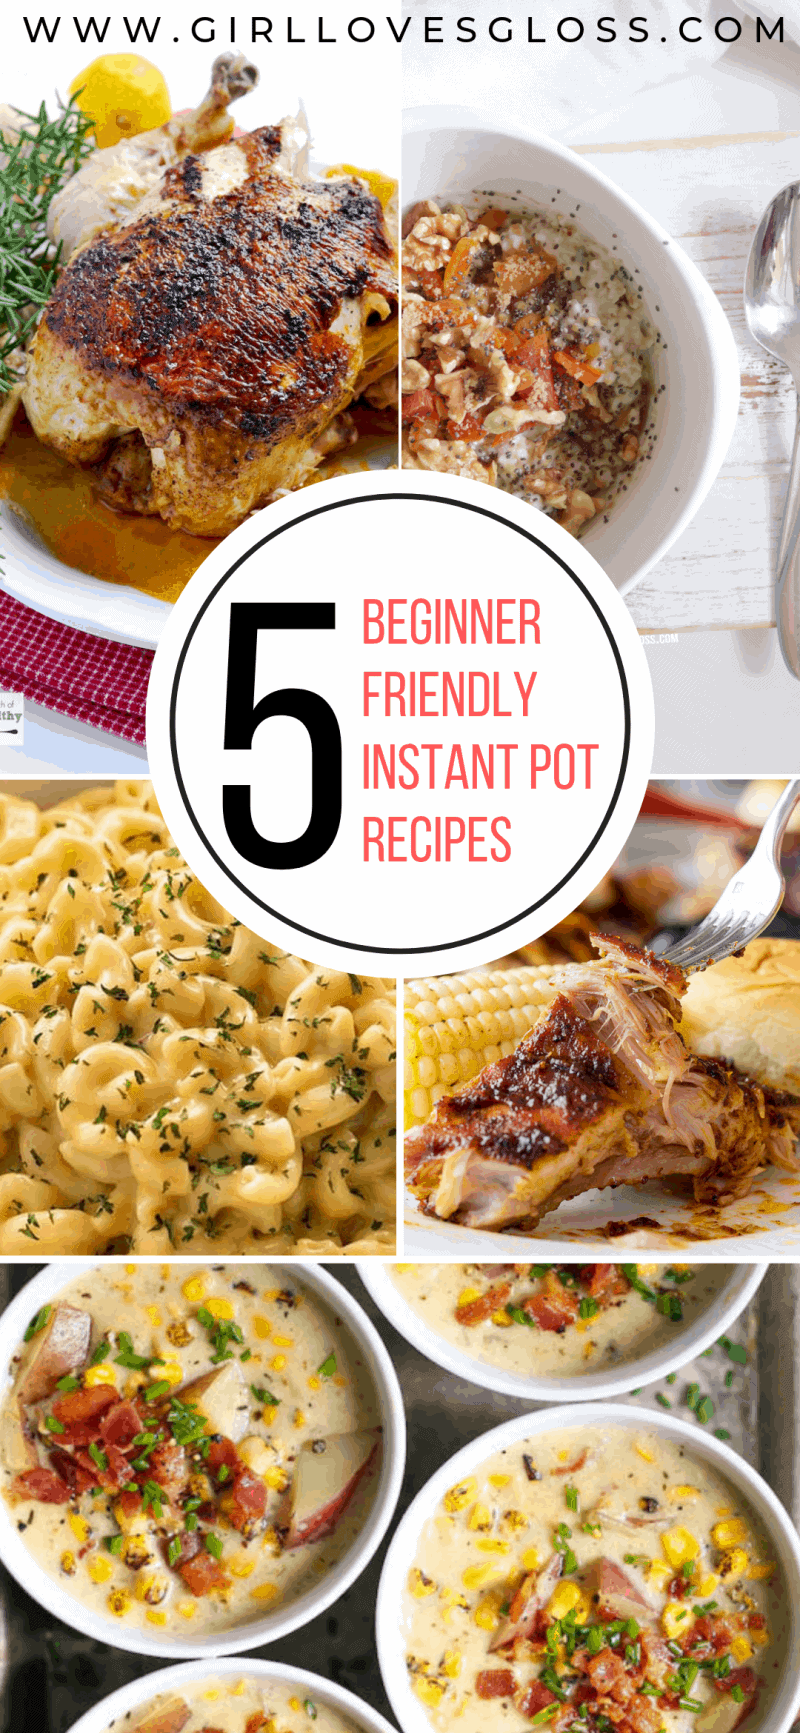 5 easy beginner friendly instant pot recipes